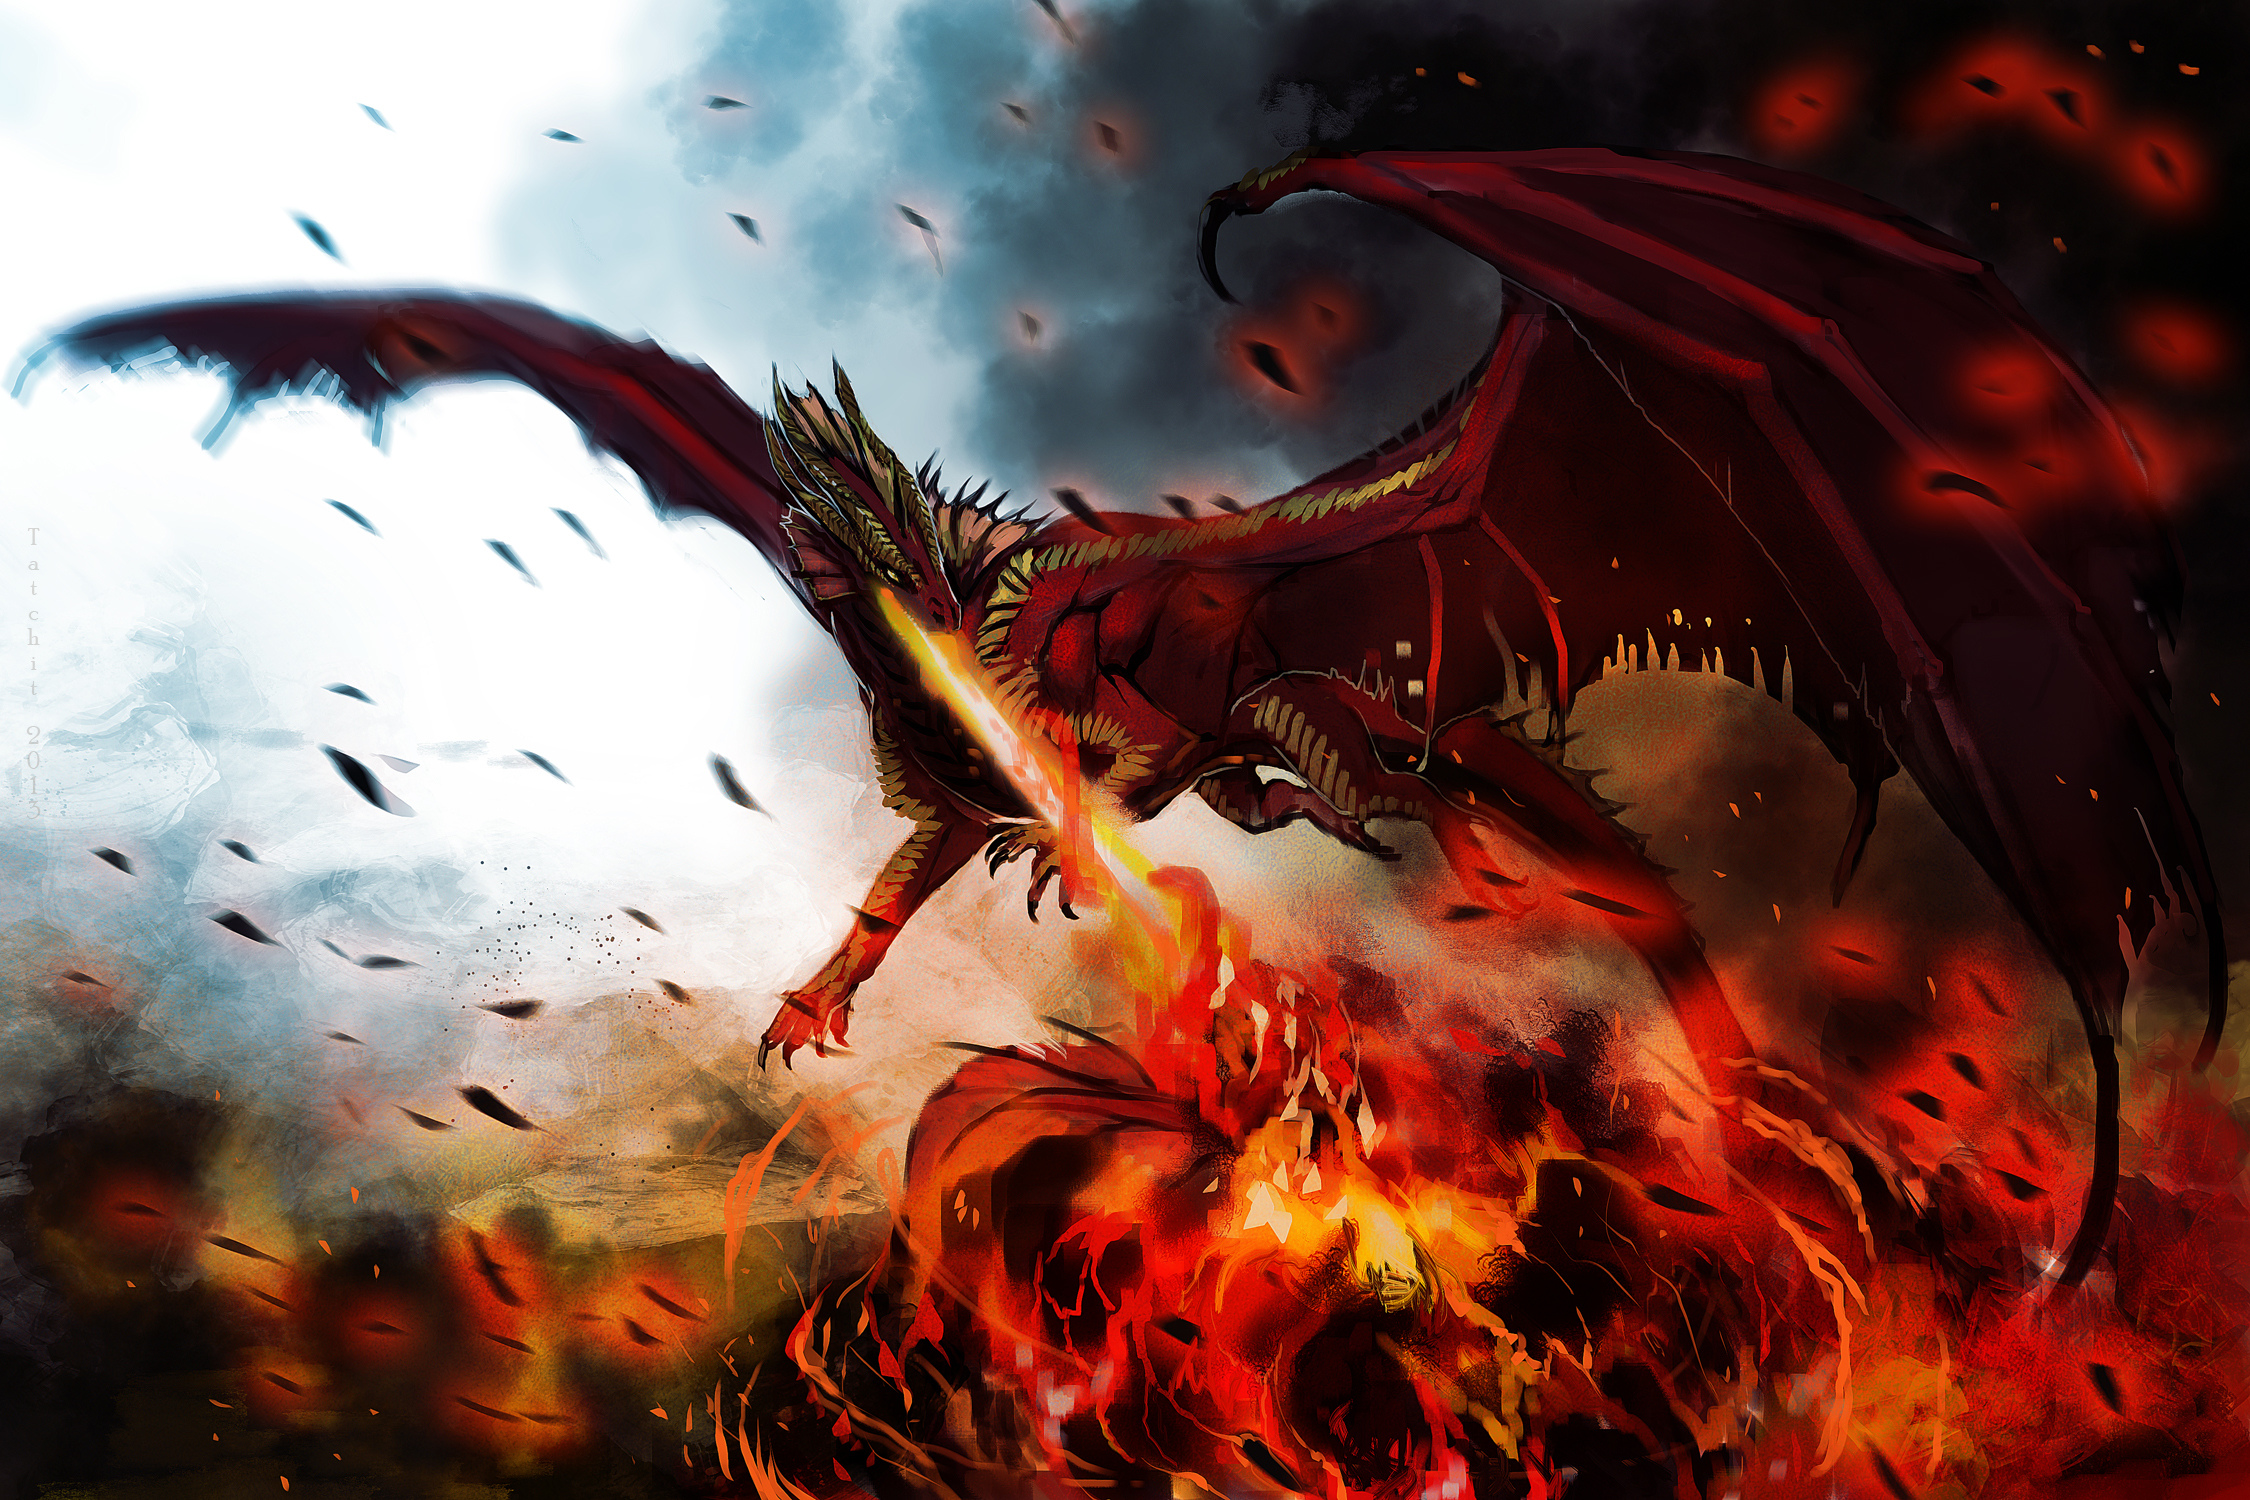 Дракон темного пламени. Аркат дракон огня. Байрирон демон. Байрирон демон драконов. Огненный дракон драгон.